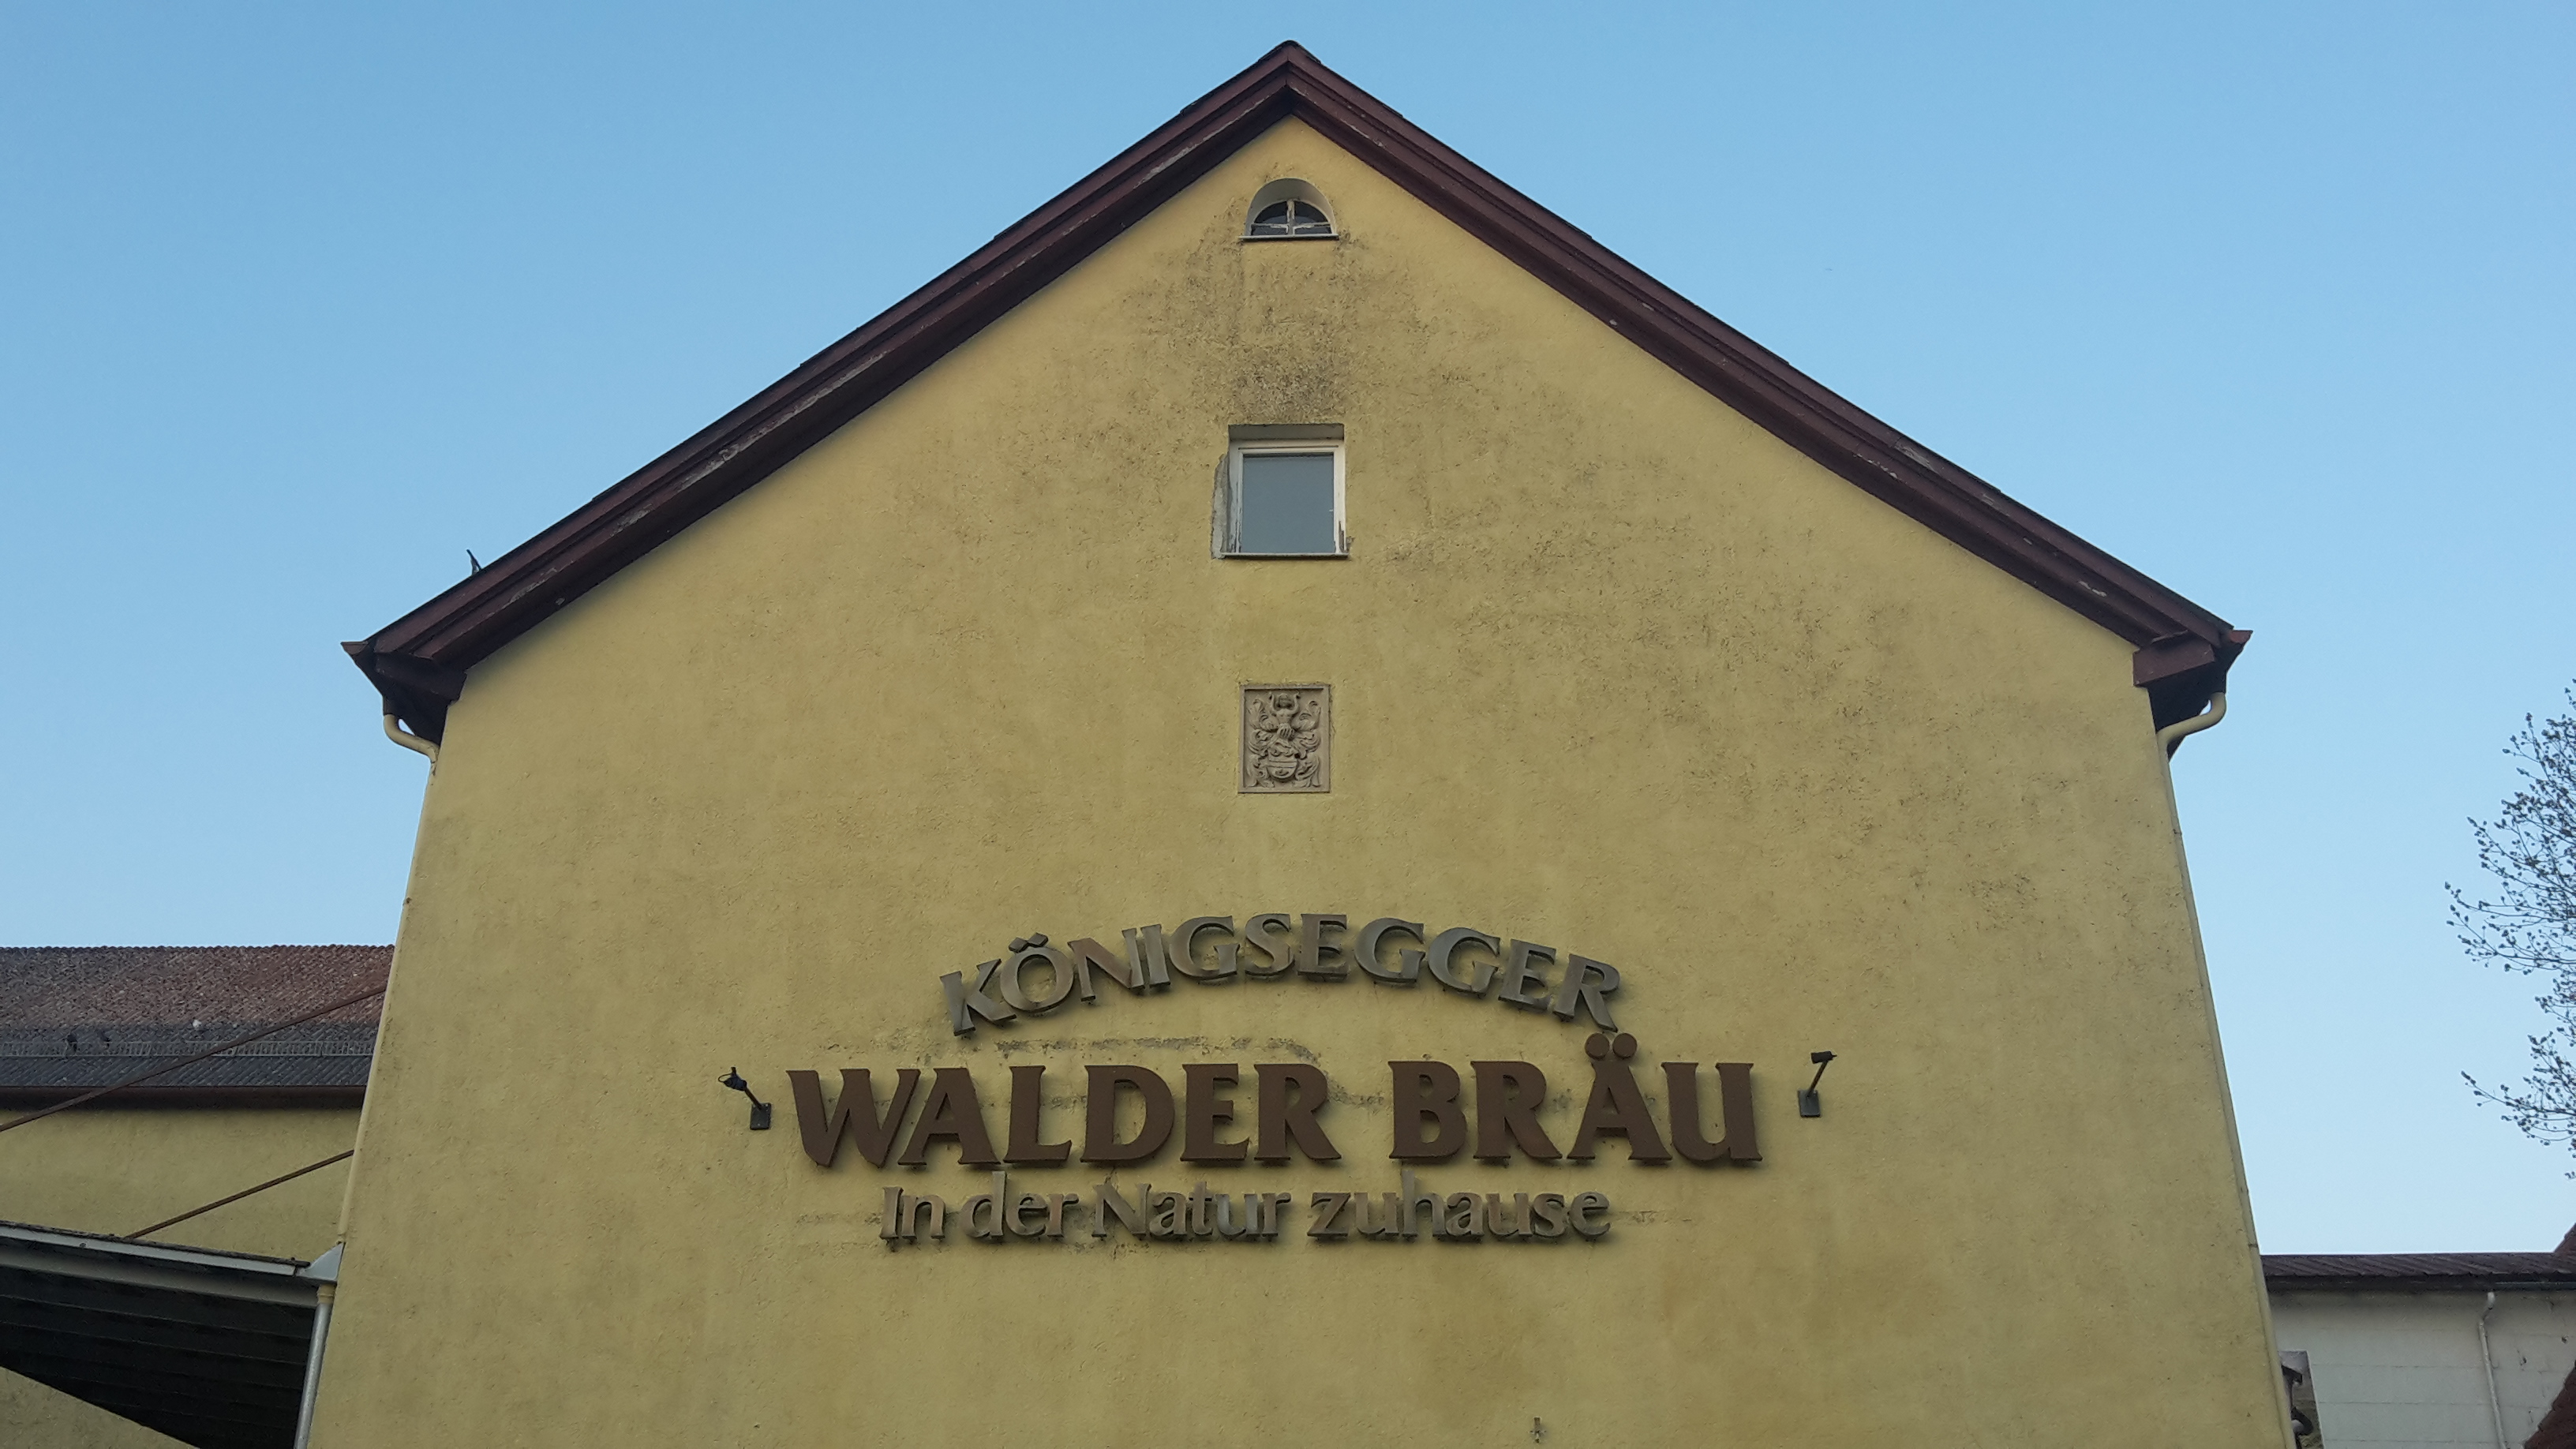 WalderBräu in Königseggwald